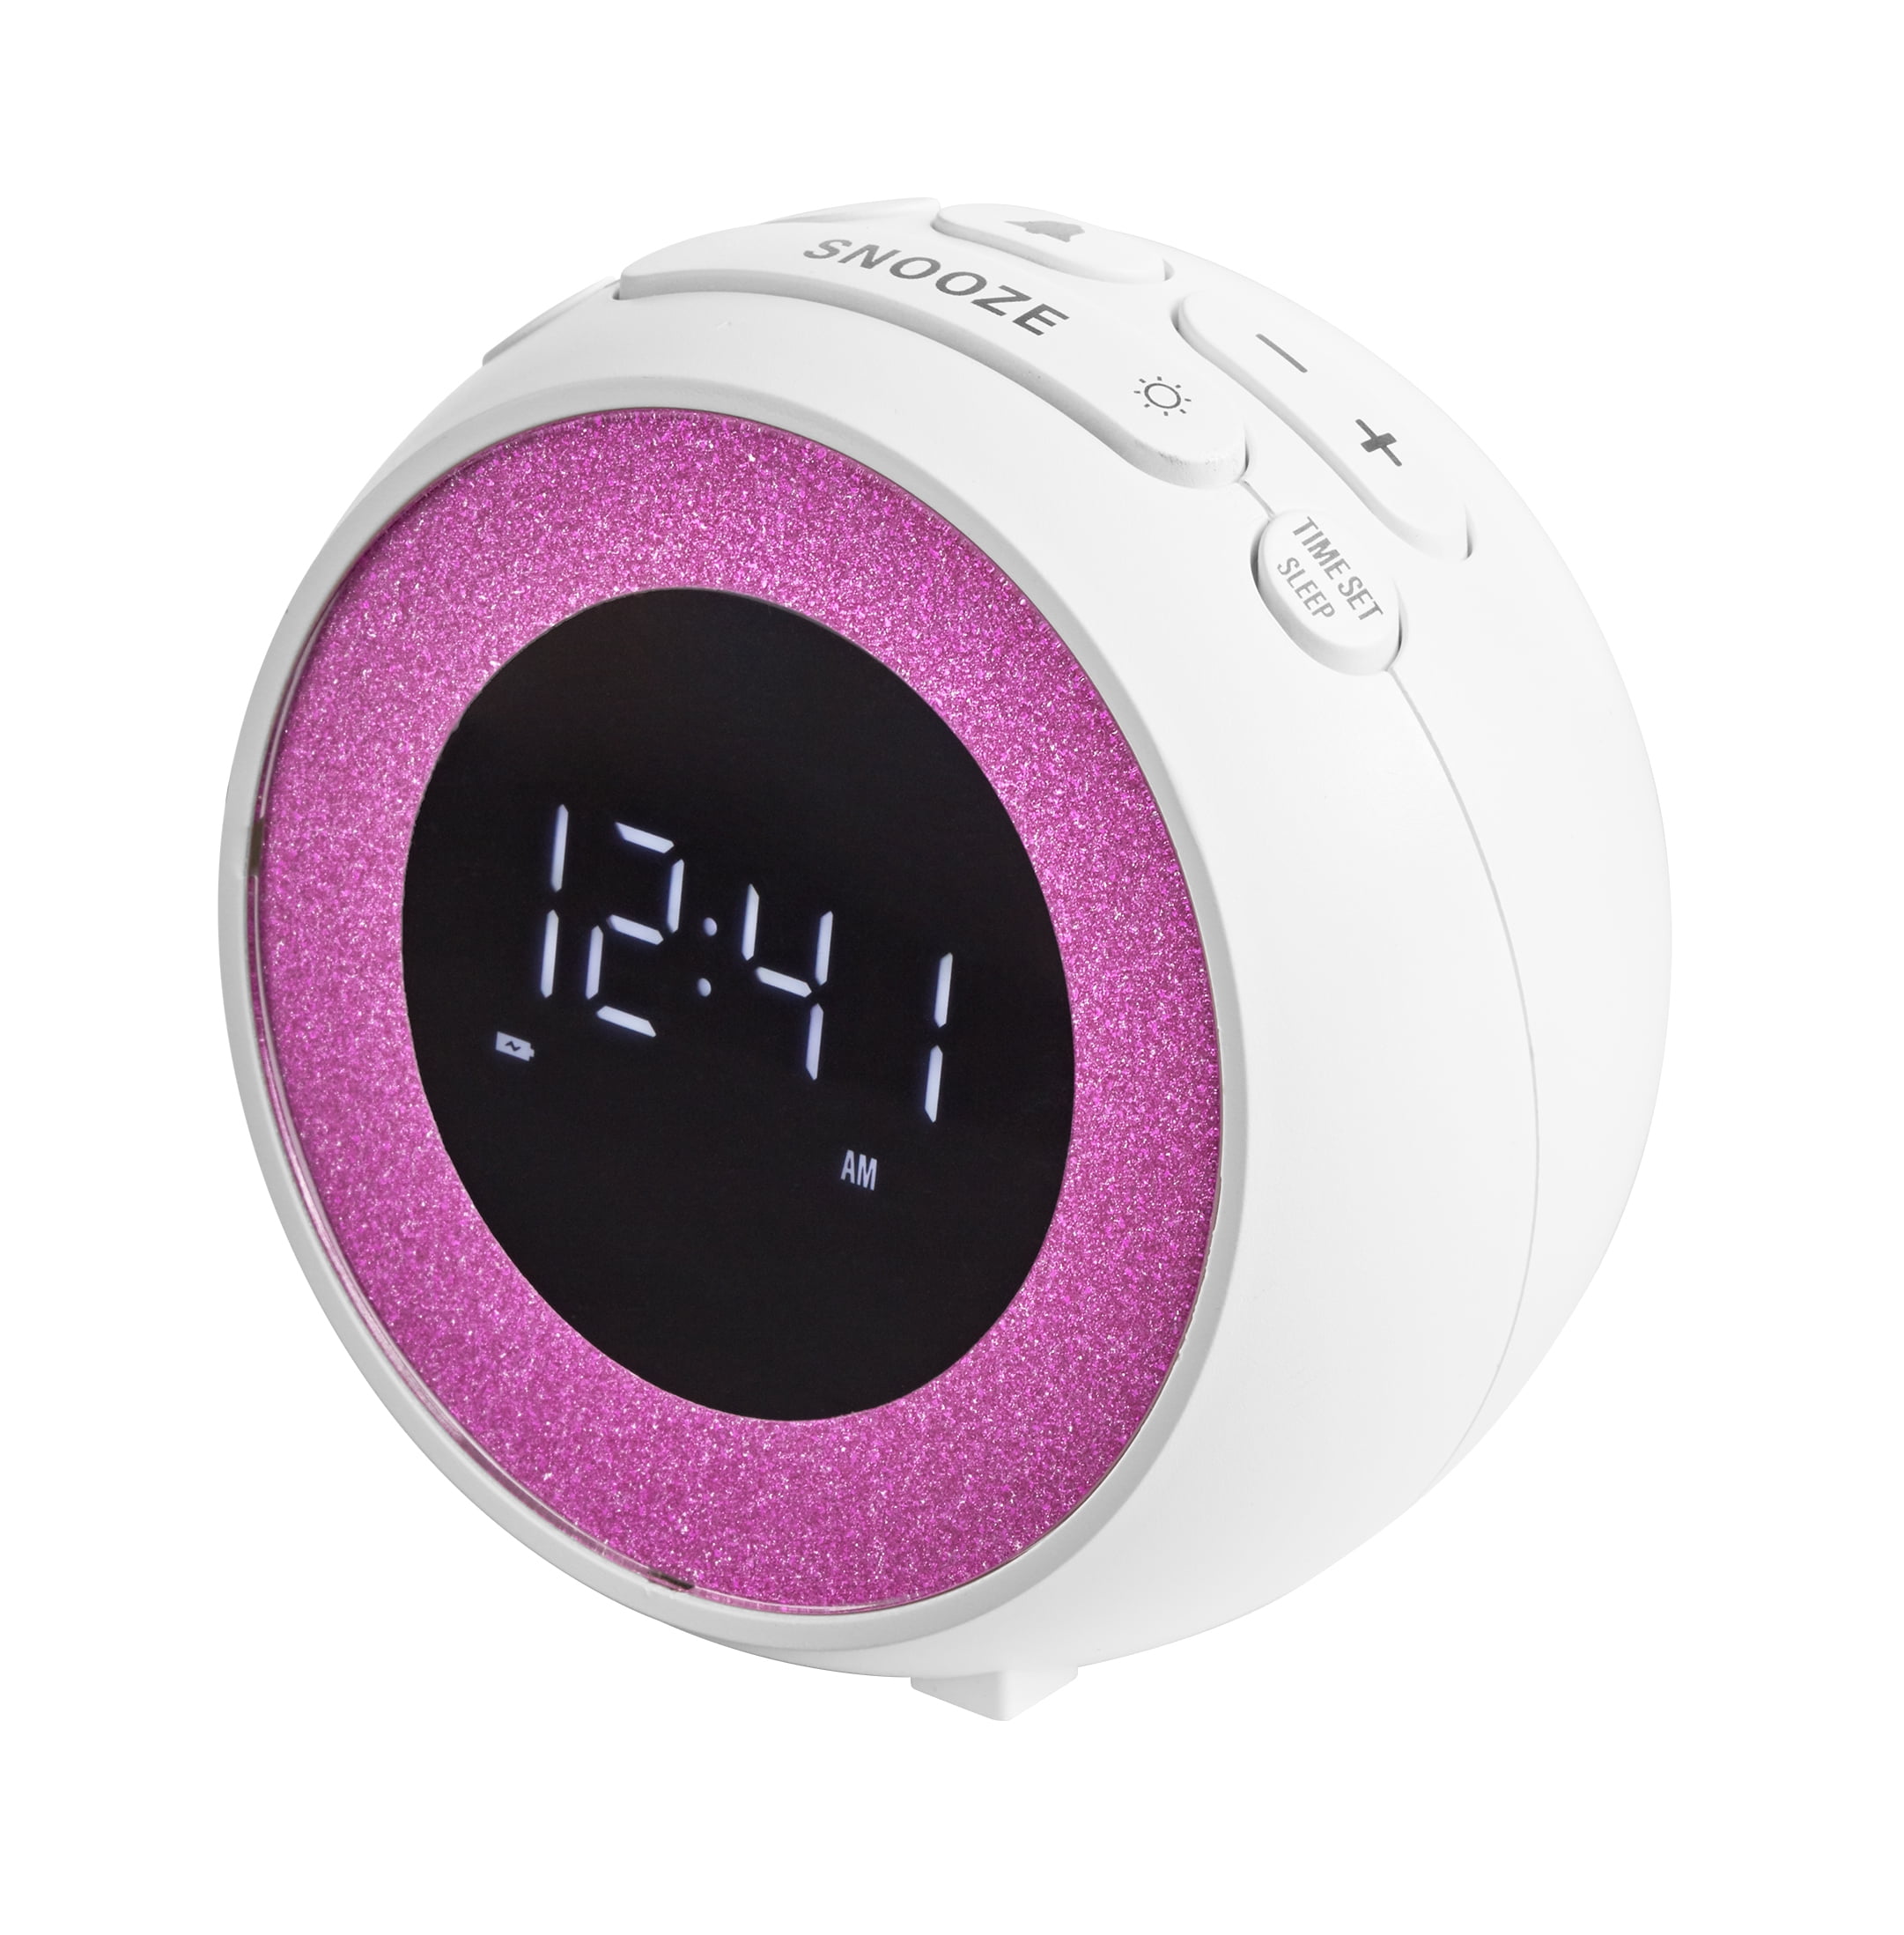 Onn. Digital Alarm Clock with Radio, White